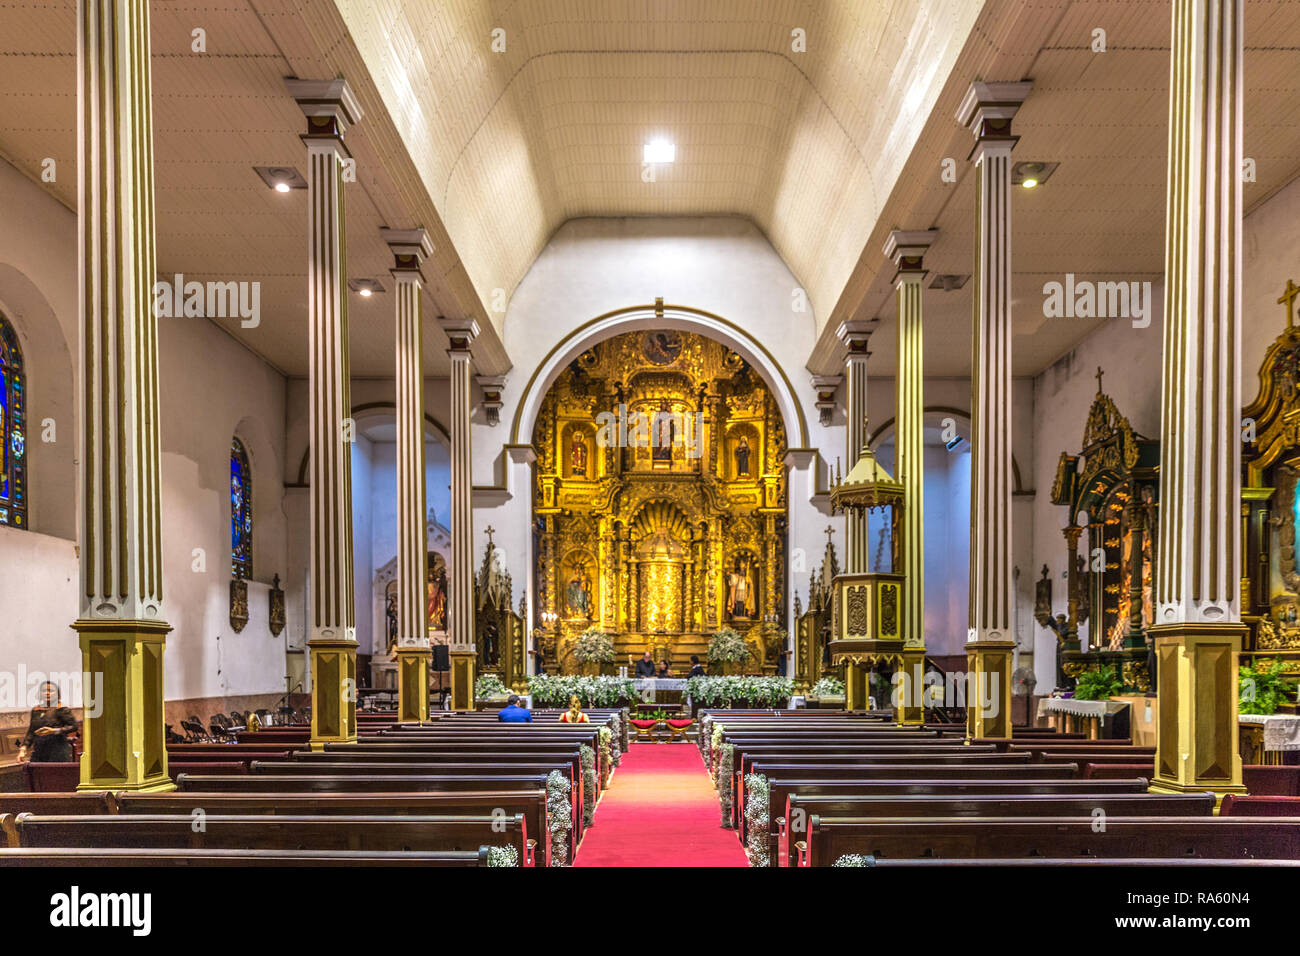 Panama City, Panama - Mar 10 2018 - Das Interieur einer katholischen Kirche an der Casco Viejo, in Panama City in Panama. Stockfoto